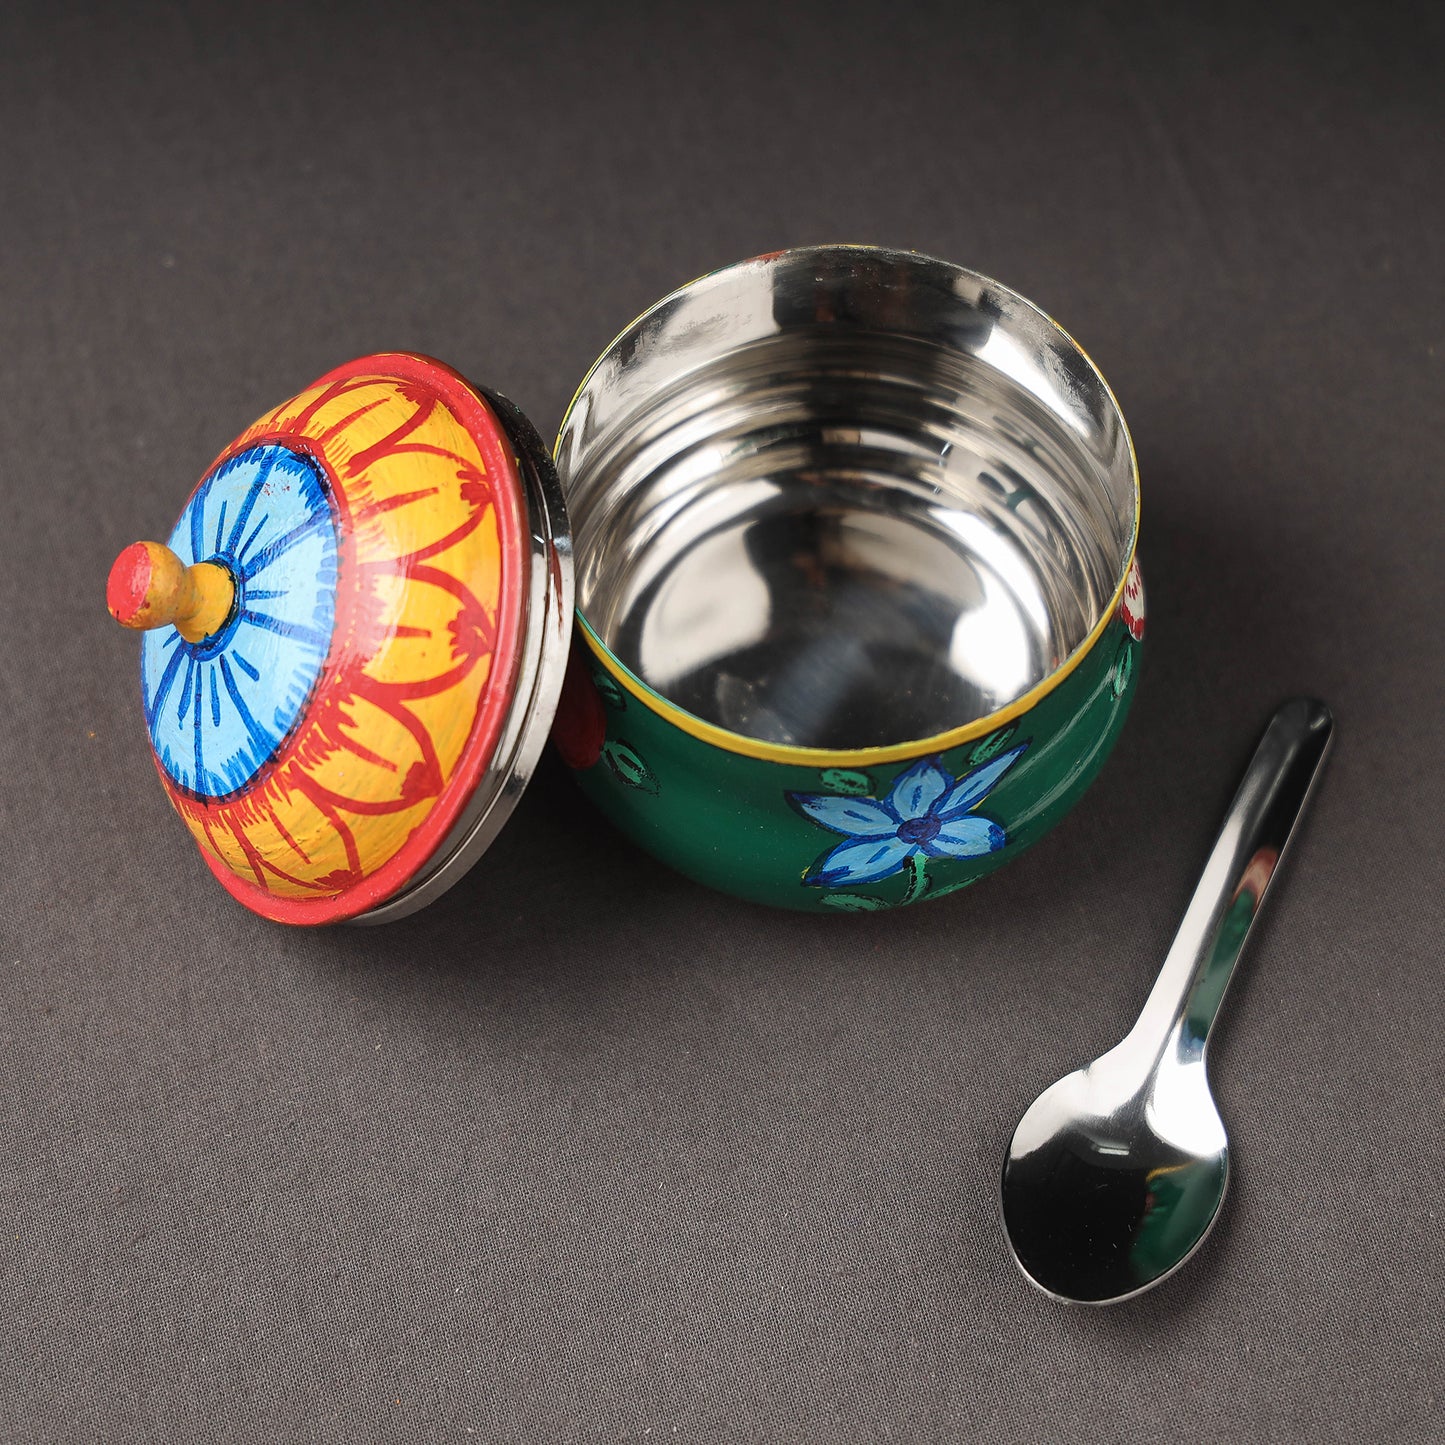 Kavad Handpainted Stainless Steel Ghee Pot with Spoon (250ml)